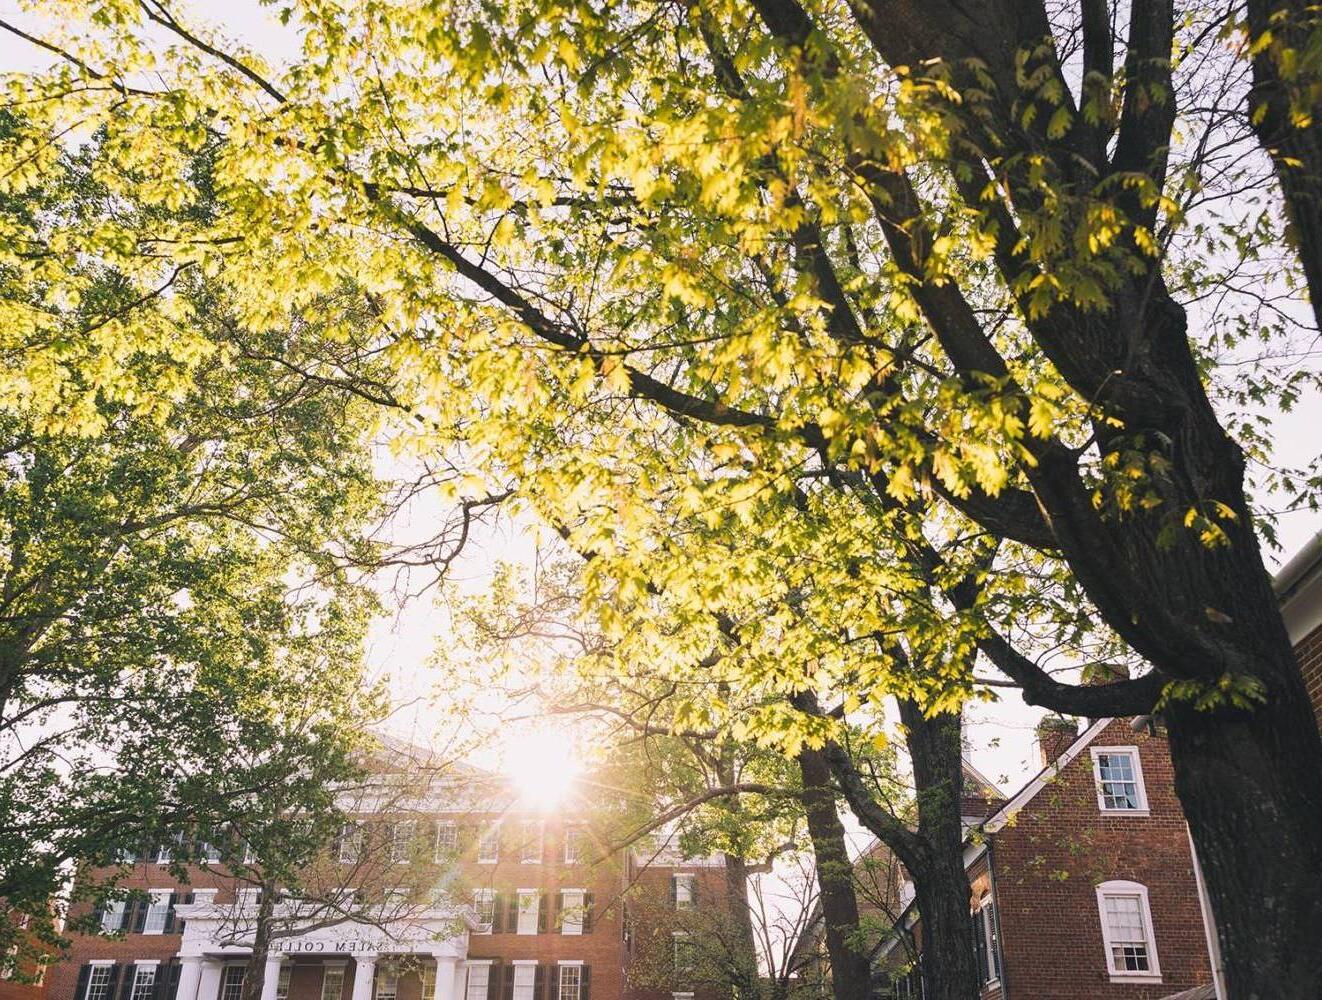 View of Salem College 校园 through the trees